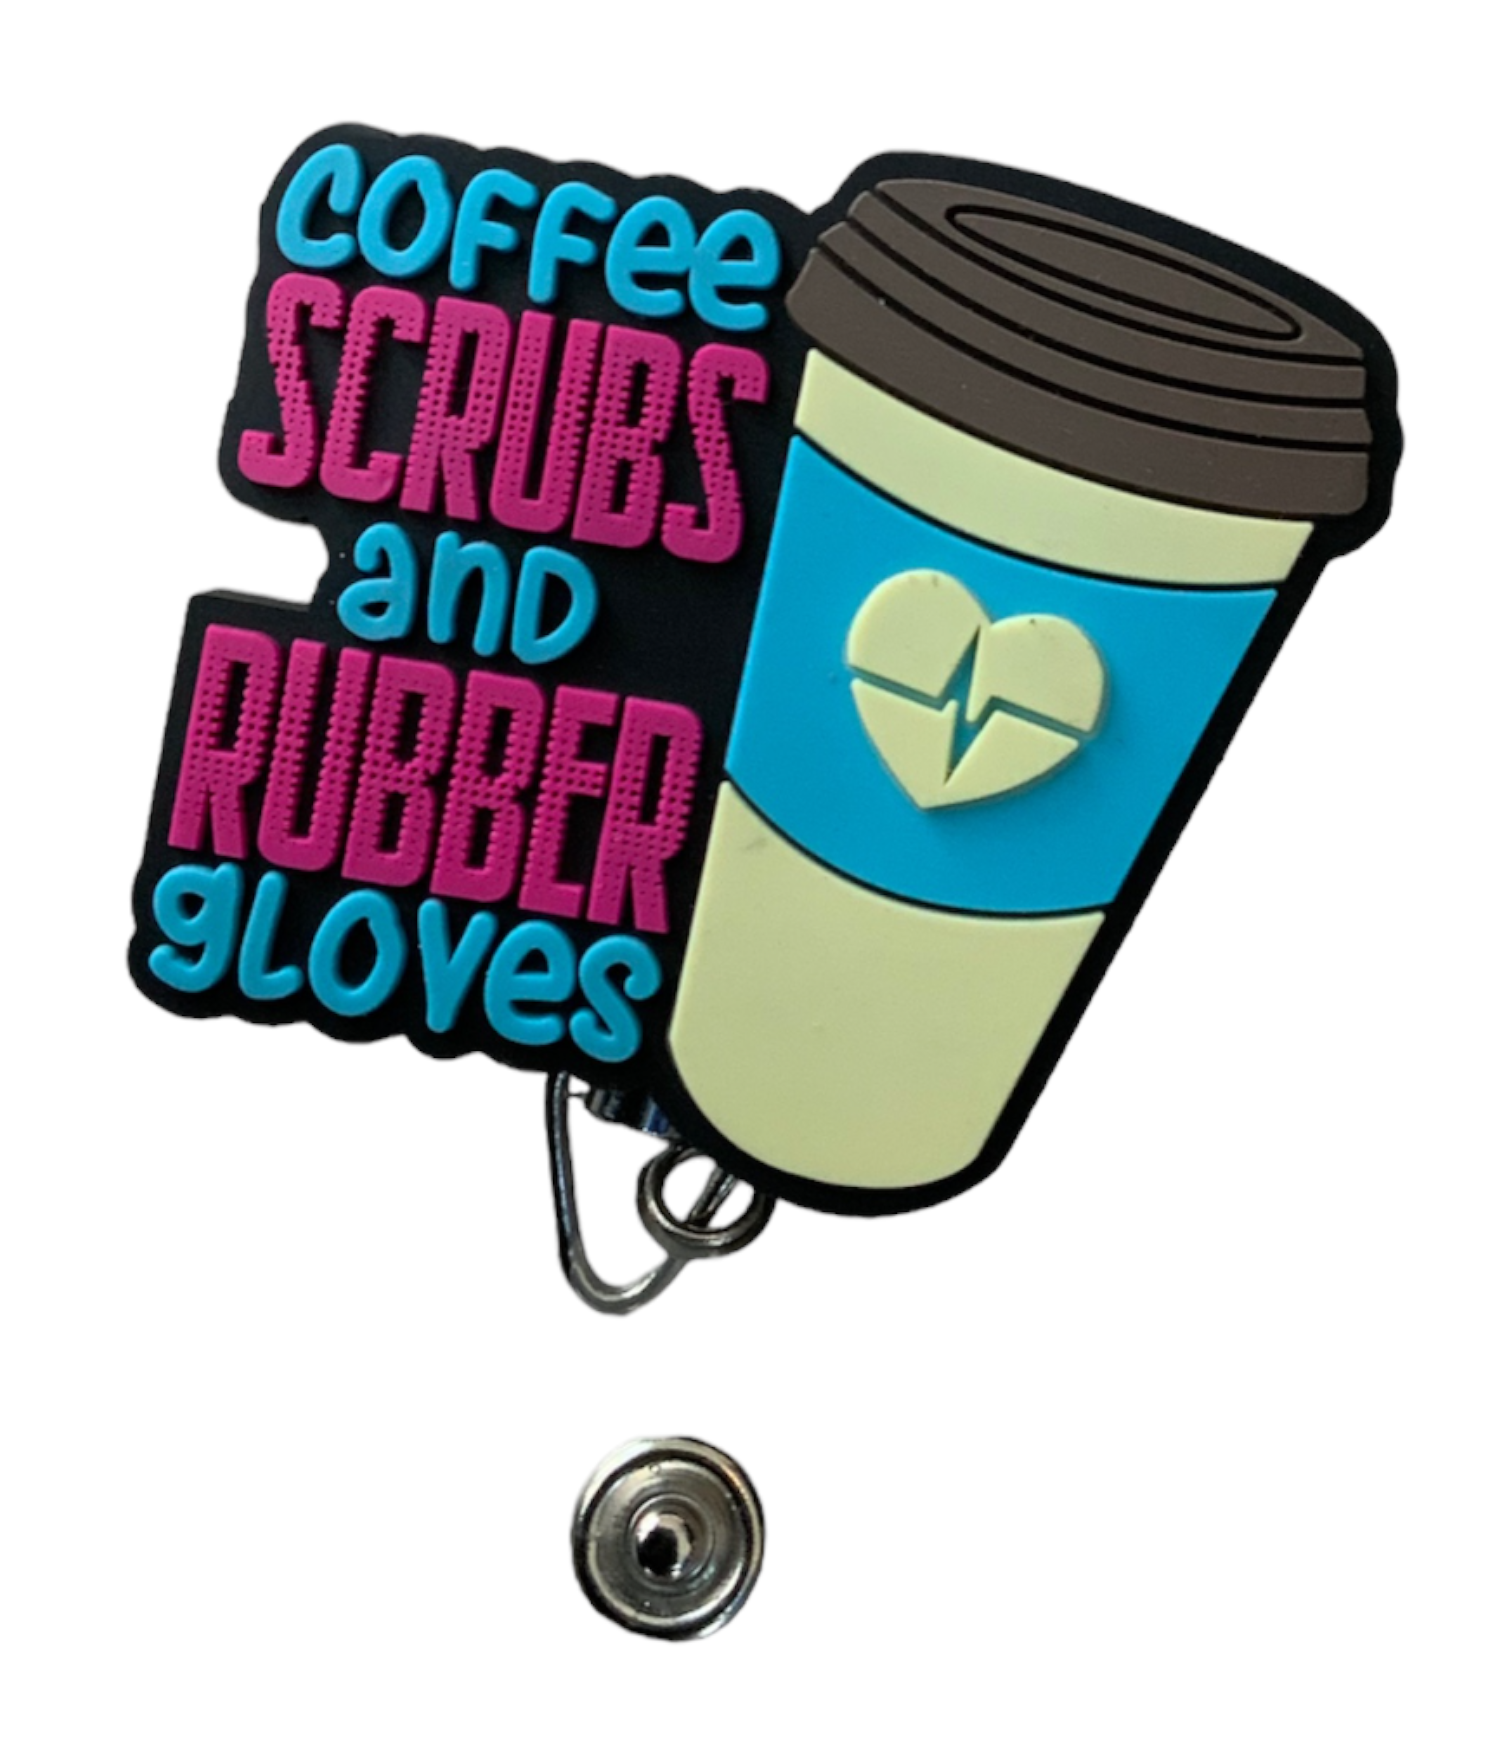 Coffee Scrubs & Rubber Gloves Badge Reel